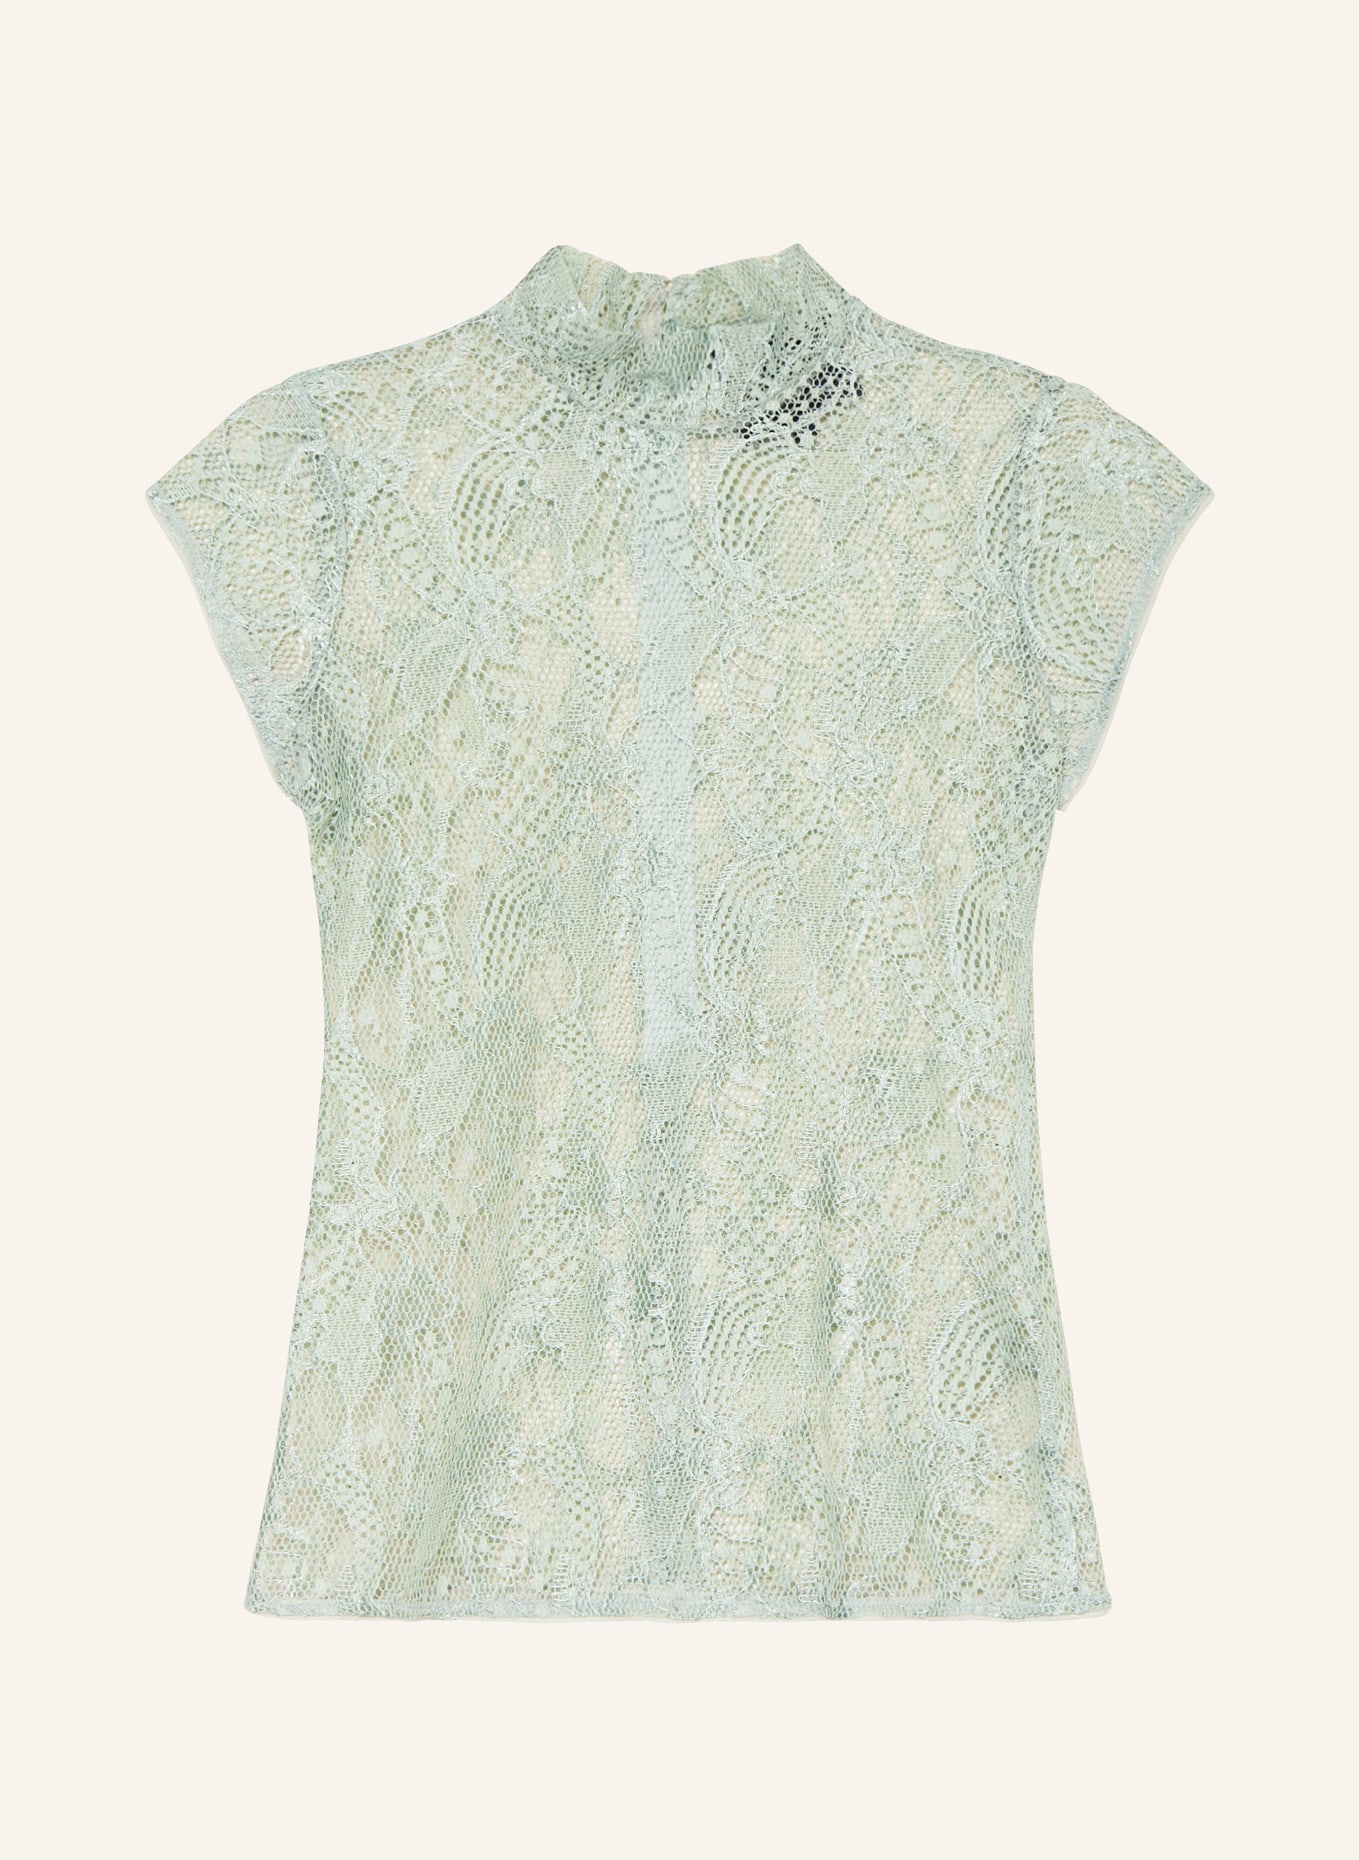 KINGA MATHE Dirndl blouse CHARLOTTE made of lace, Color: MINT (Image 1)